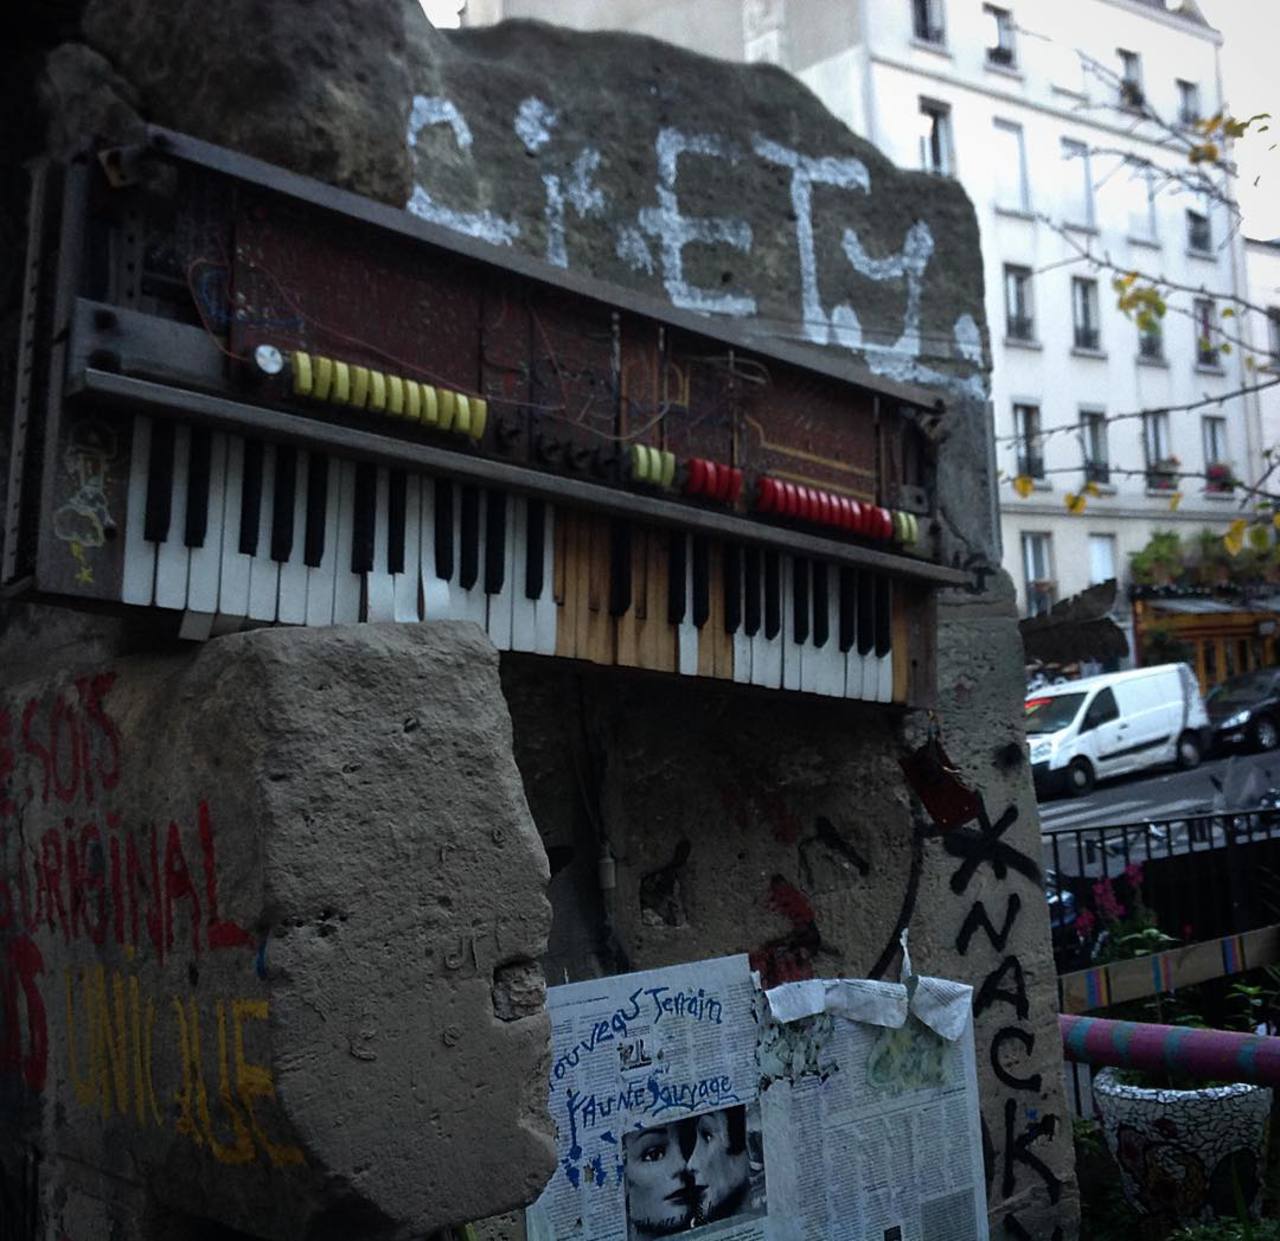 #Paris #graffiti photo by @stefetlinda http://ift.tt/1PNKSjU #StreetArt https://t.co/XNPhXxLYSB